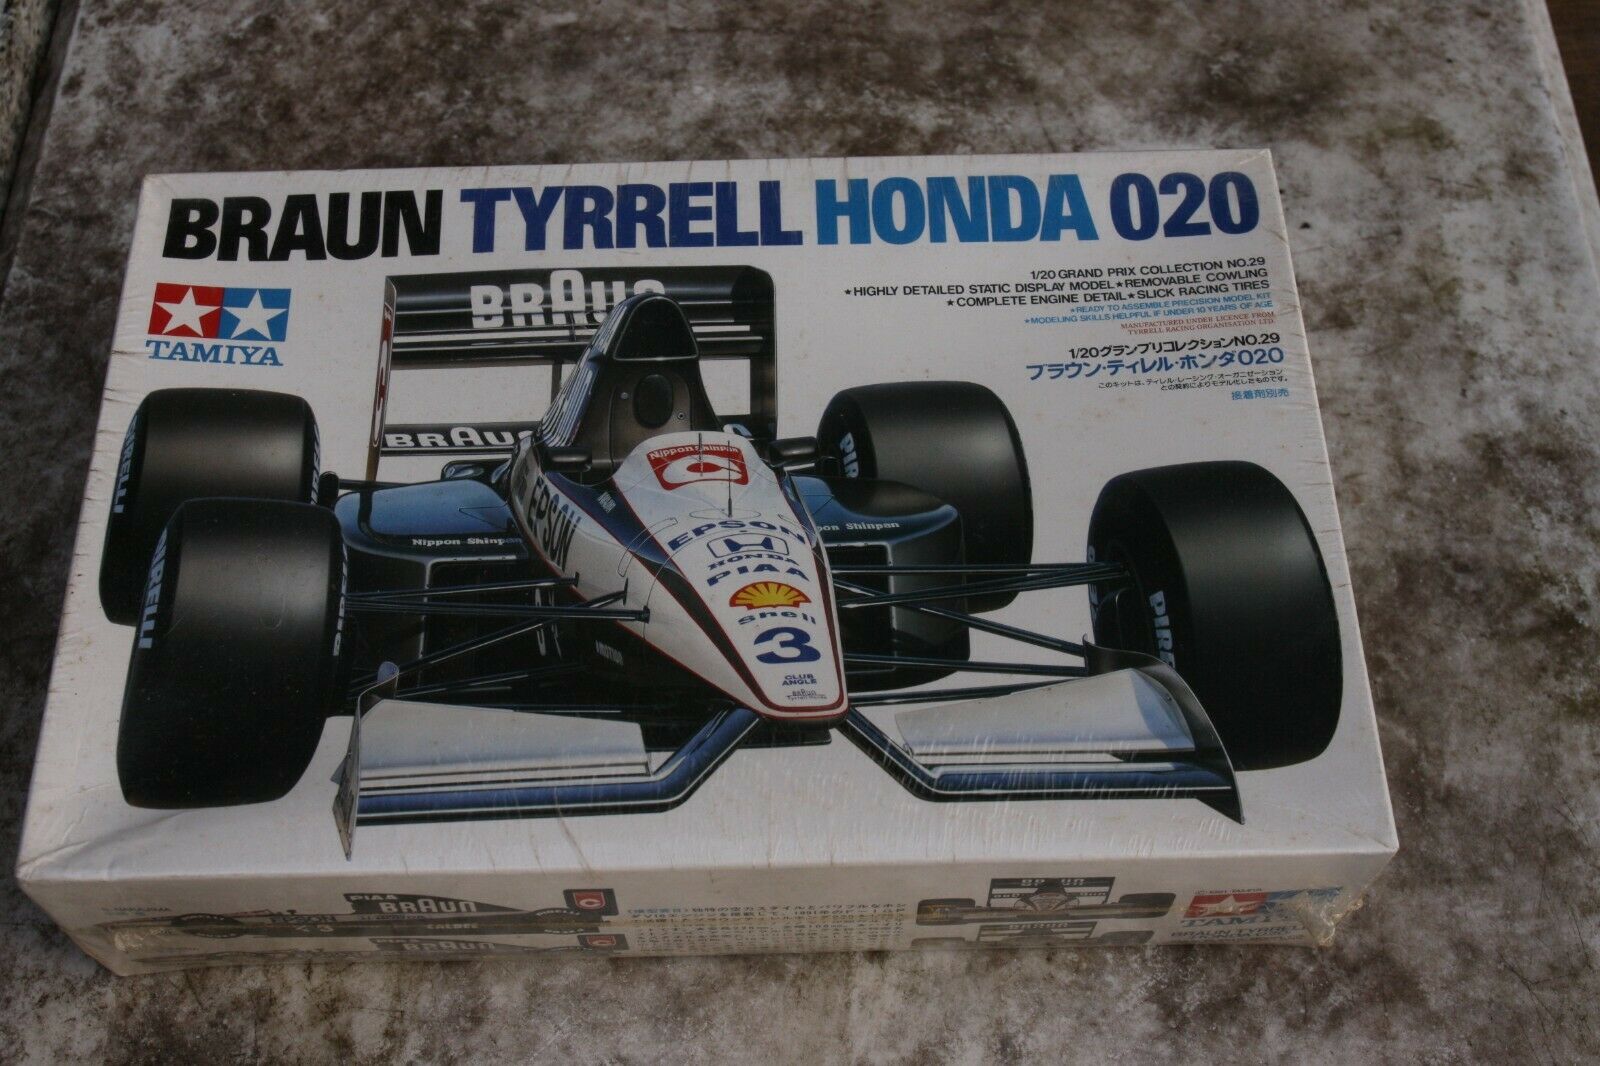 Braun Tyrrel Honda 020 Nakajima Formula 1 1/20 Tamiya Sealed New